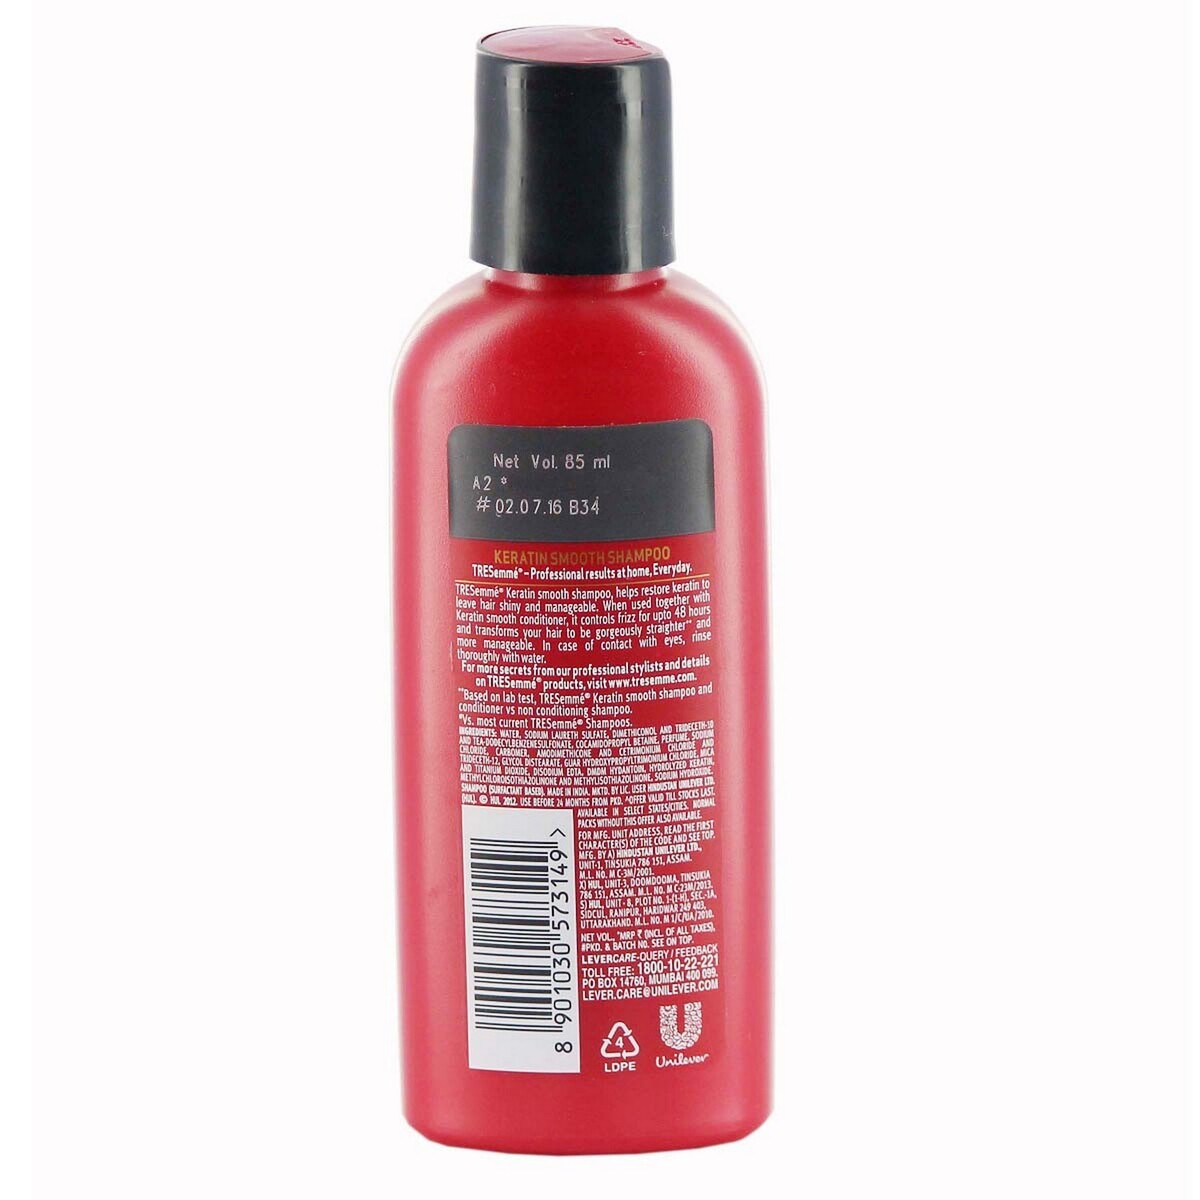 TRESemme Shampoo Keratin Smooth 85ml